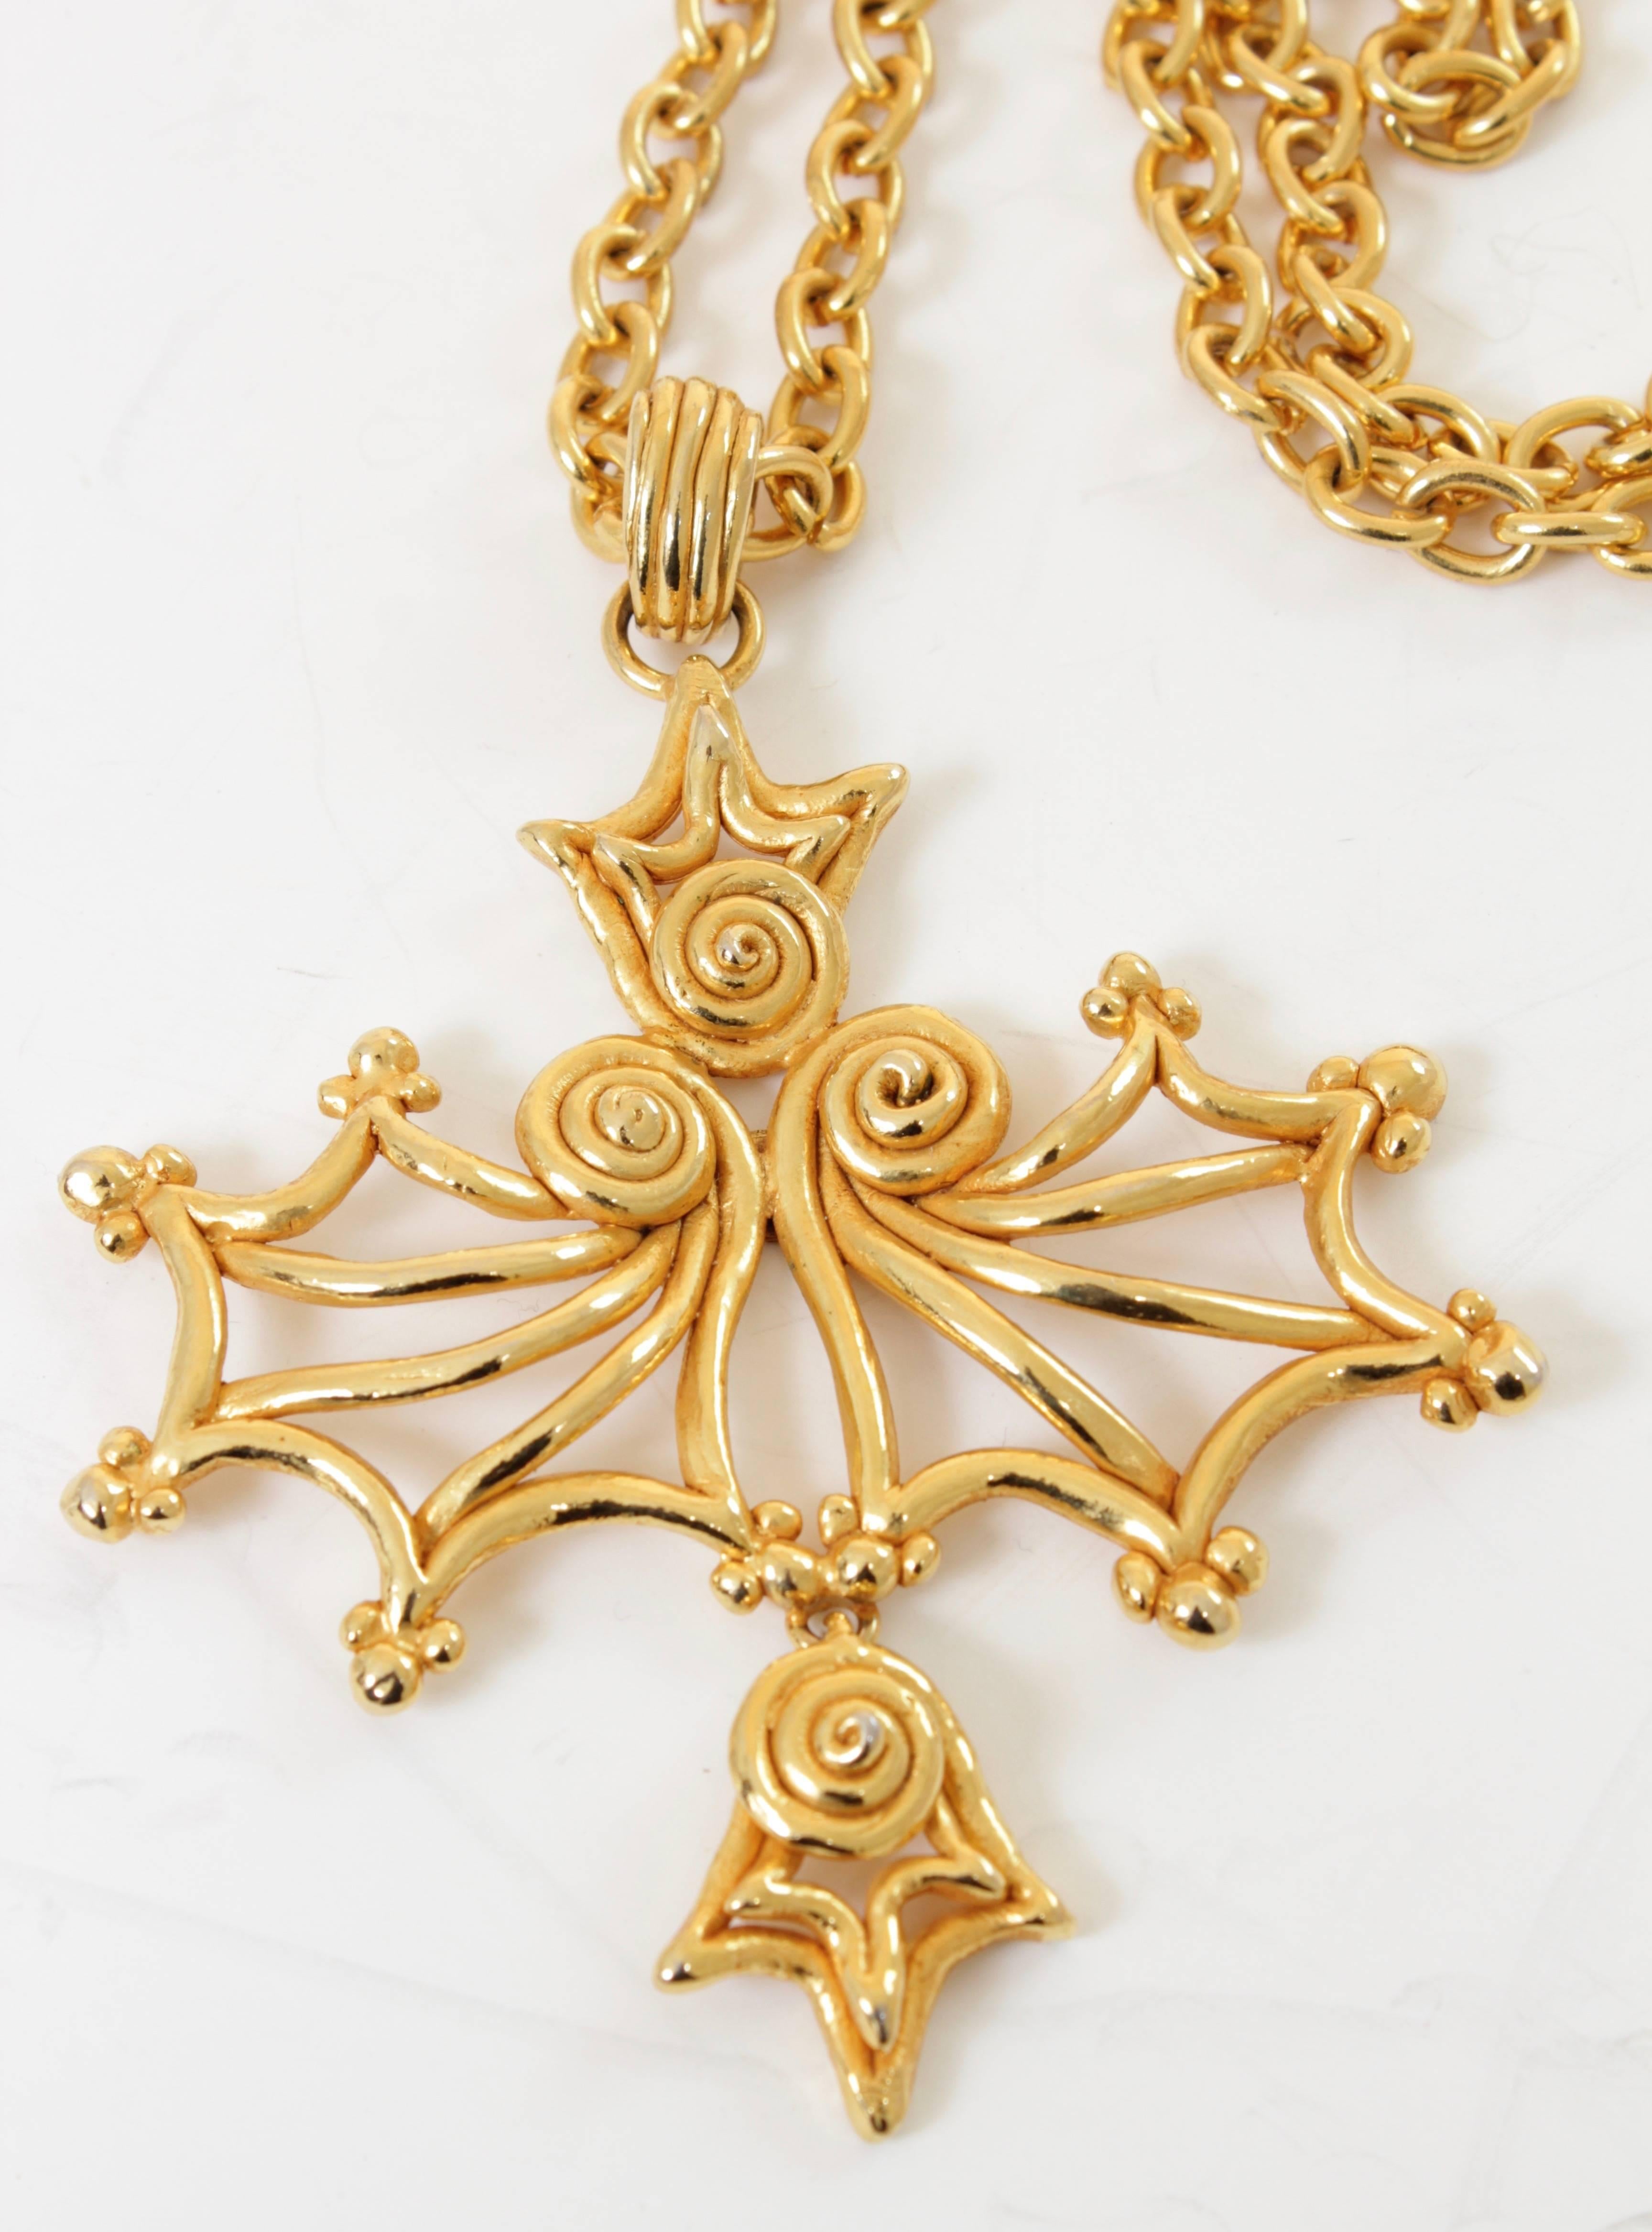 Women's Sonia Rykiel Massive Pendant Statement Necklace Long Chunky Chain Gold Metal 80s